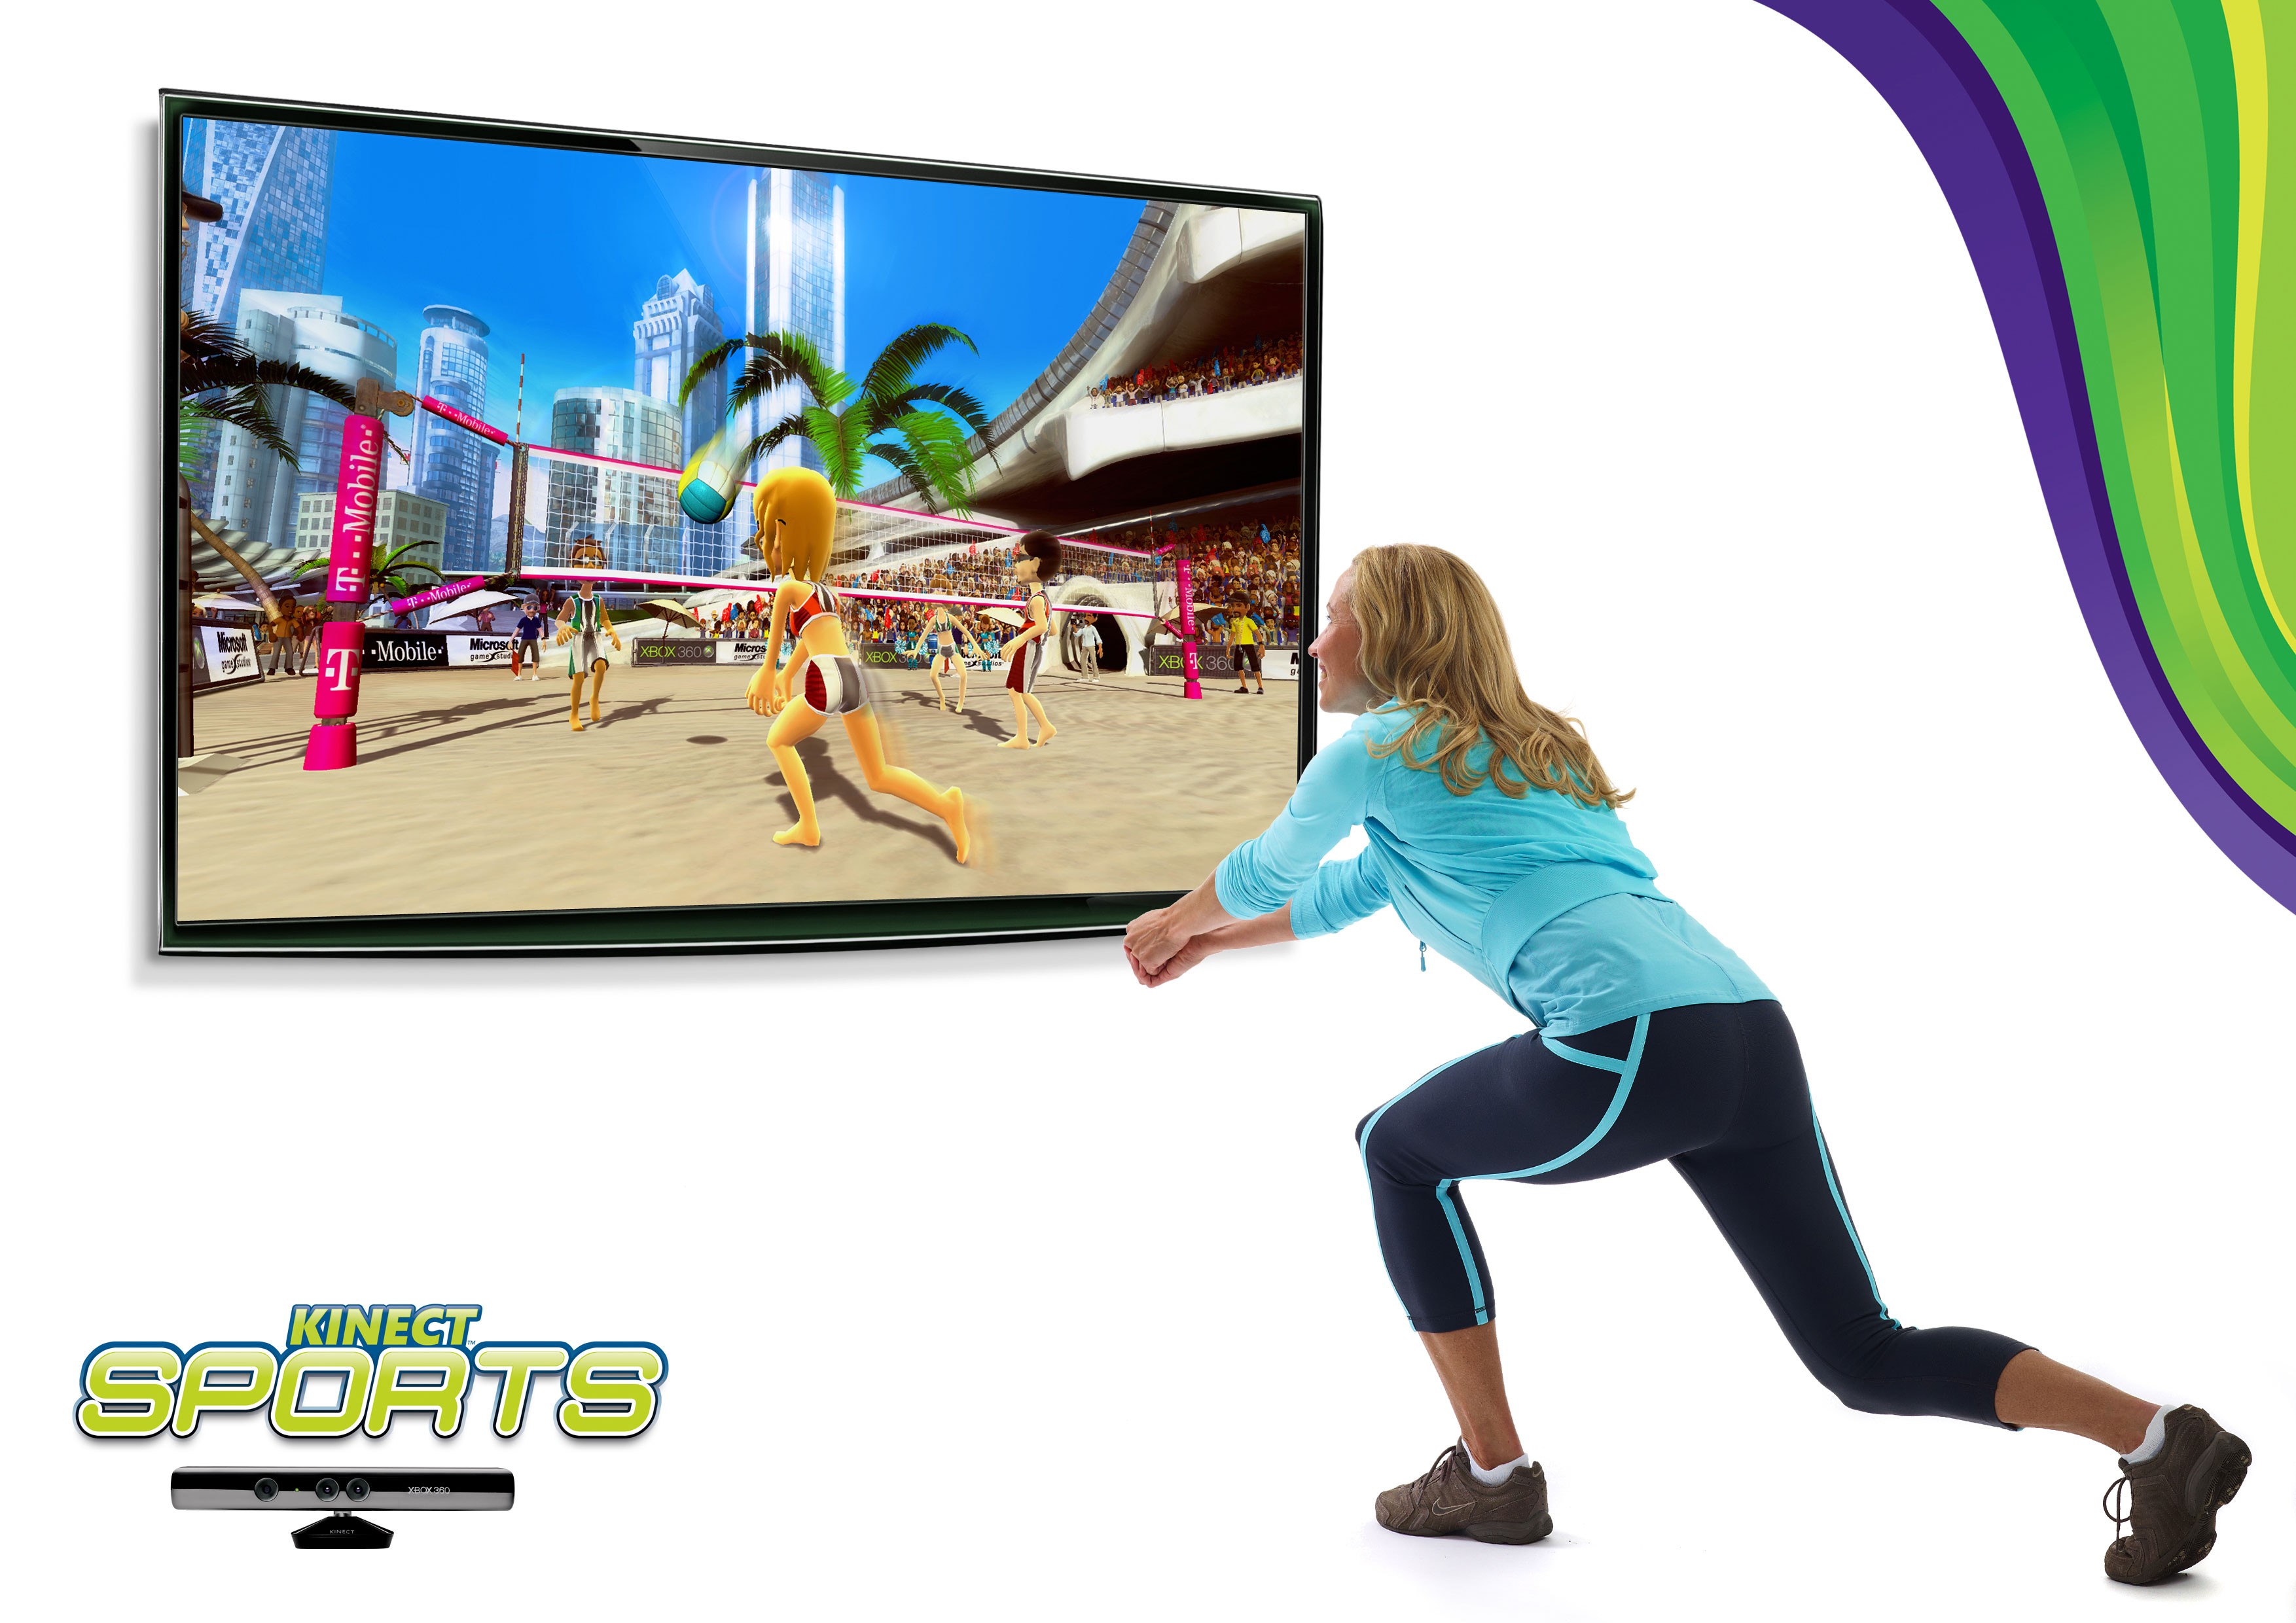 Kinect sport xbox 360